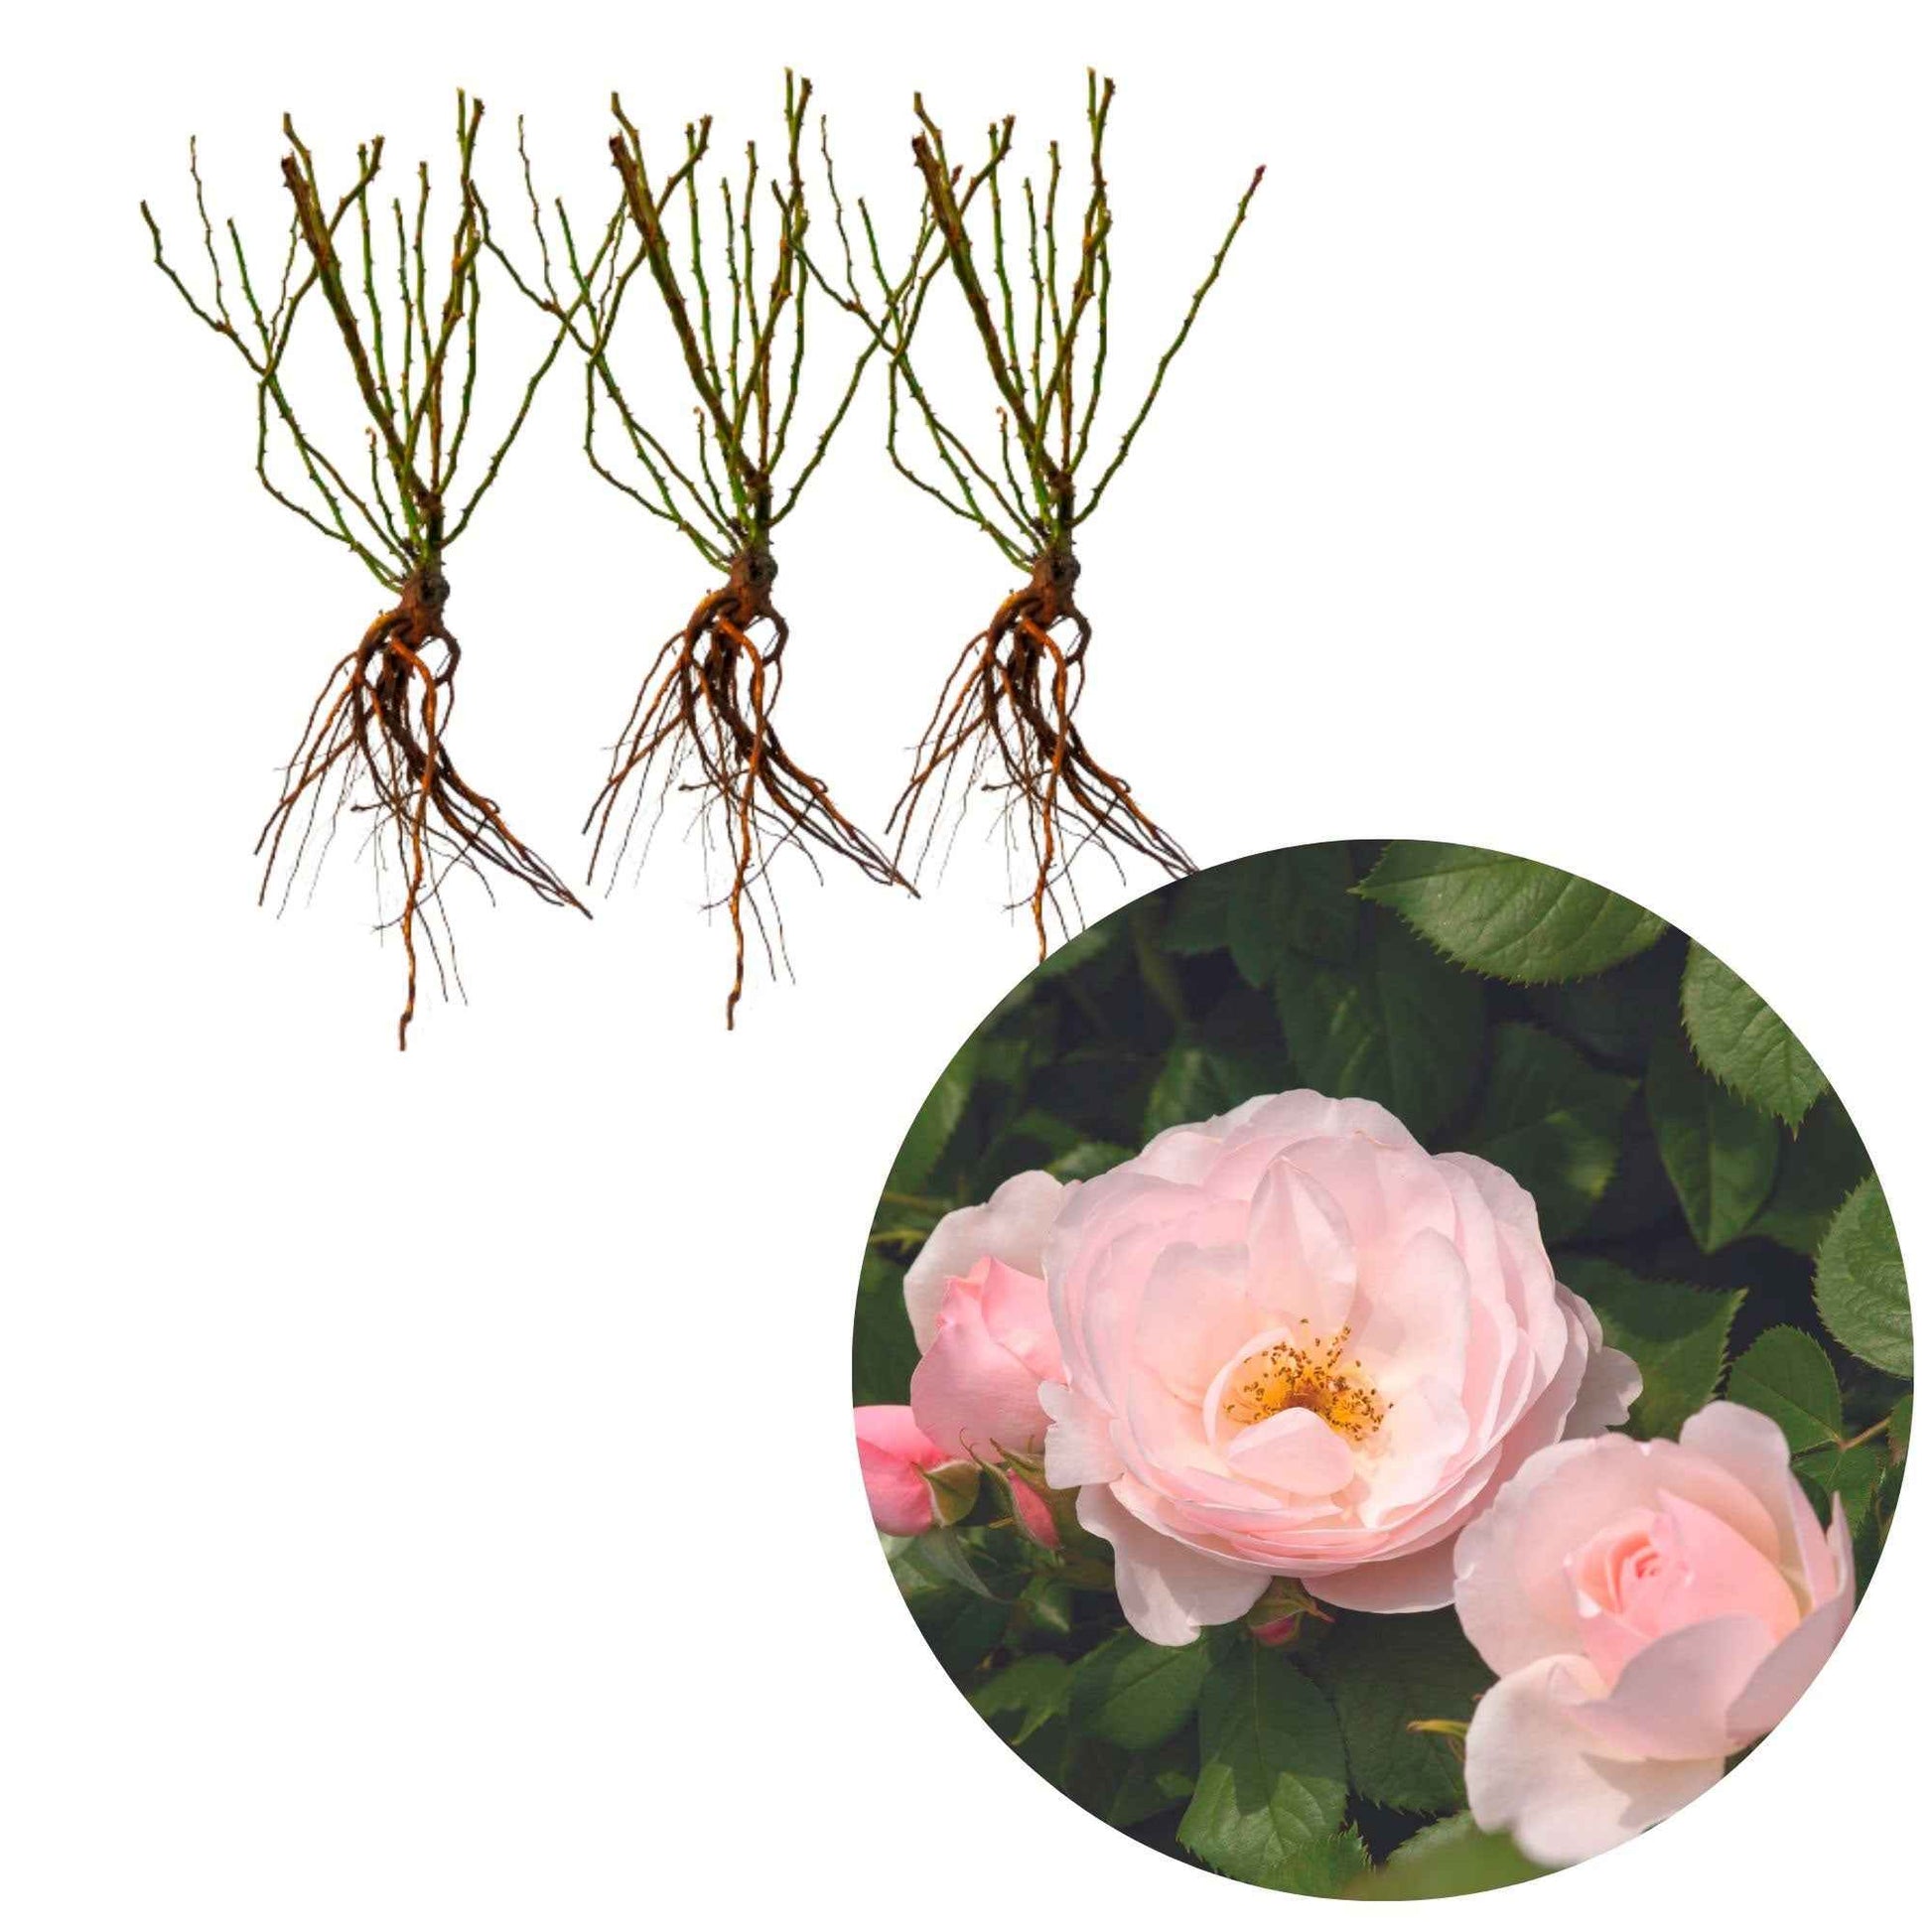 3x Roses Rosa 'Pear'® Rose  - Plants à racines nues - Plantes rustiques